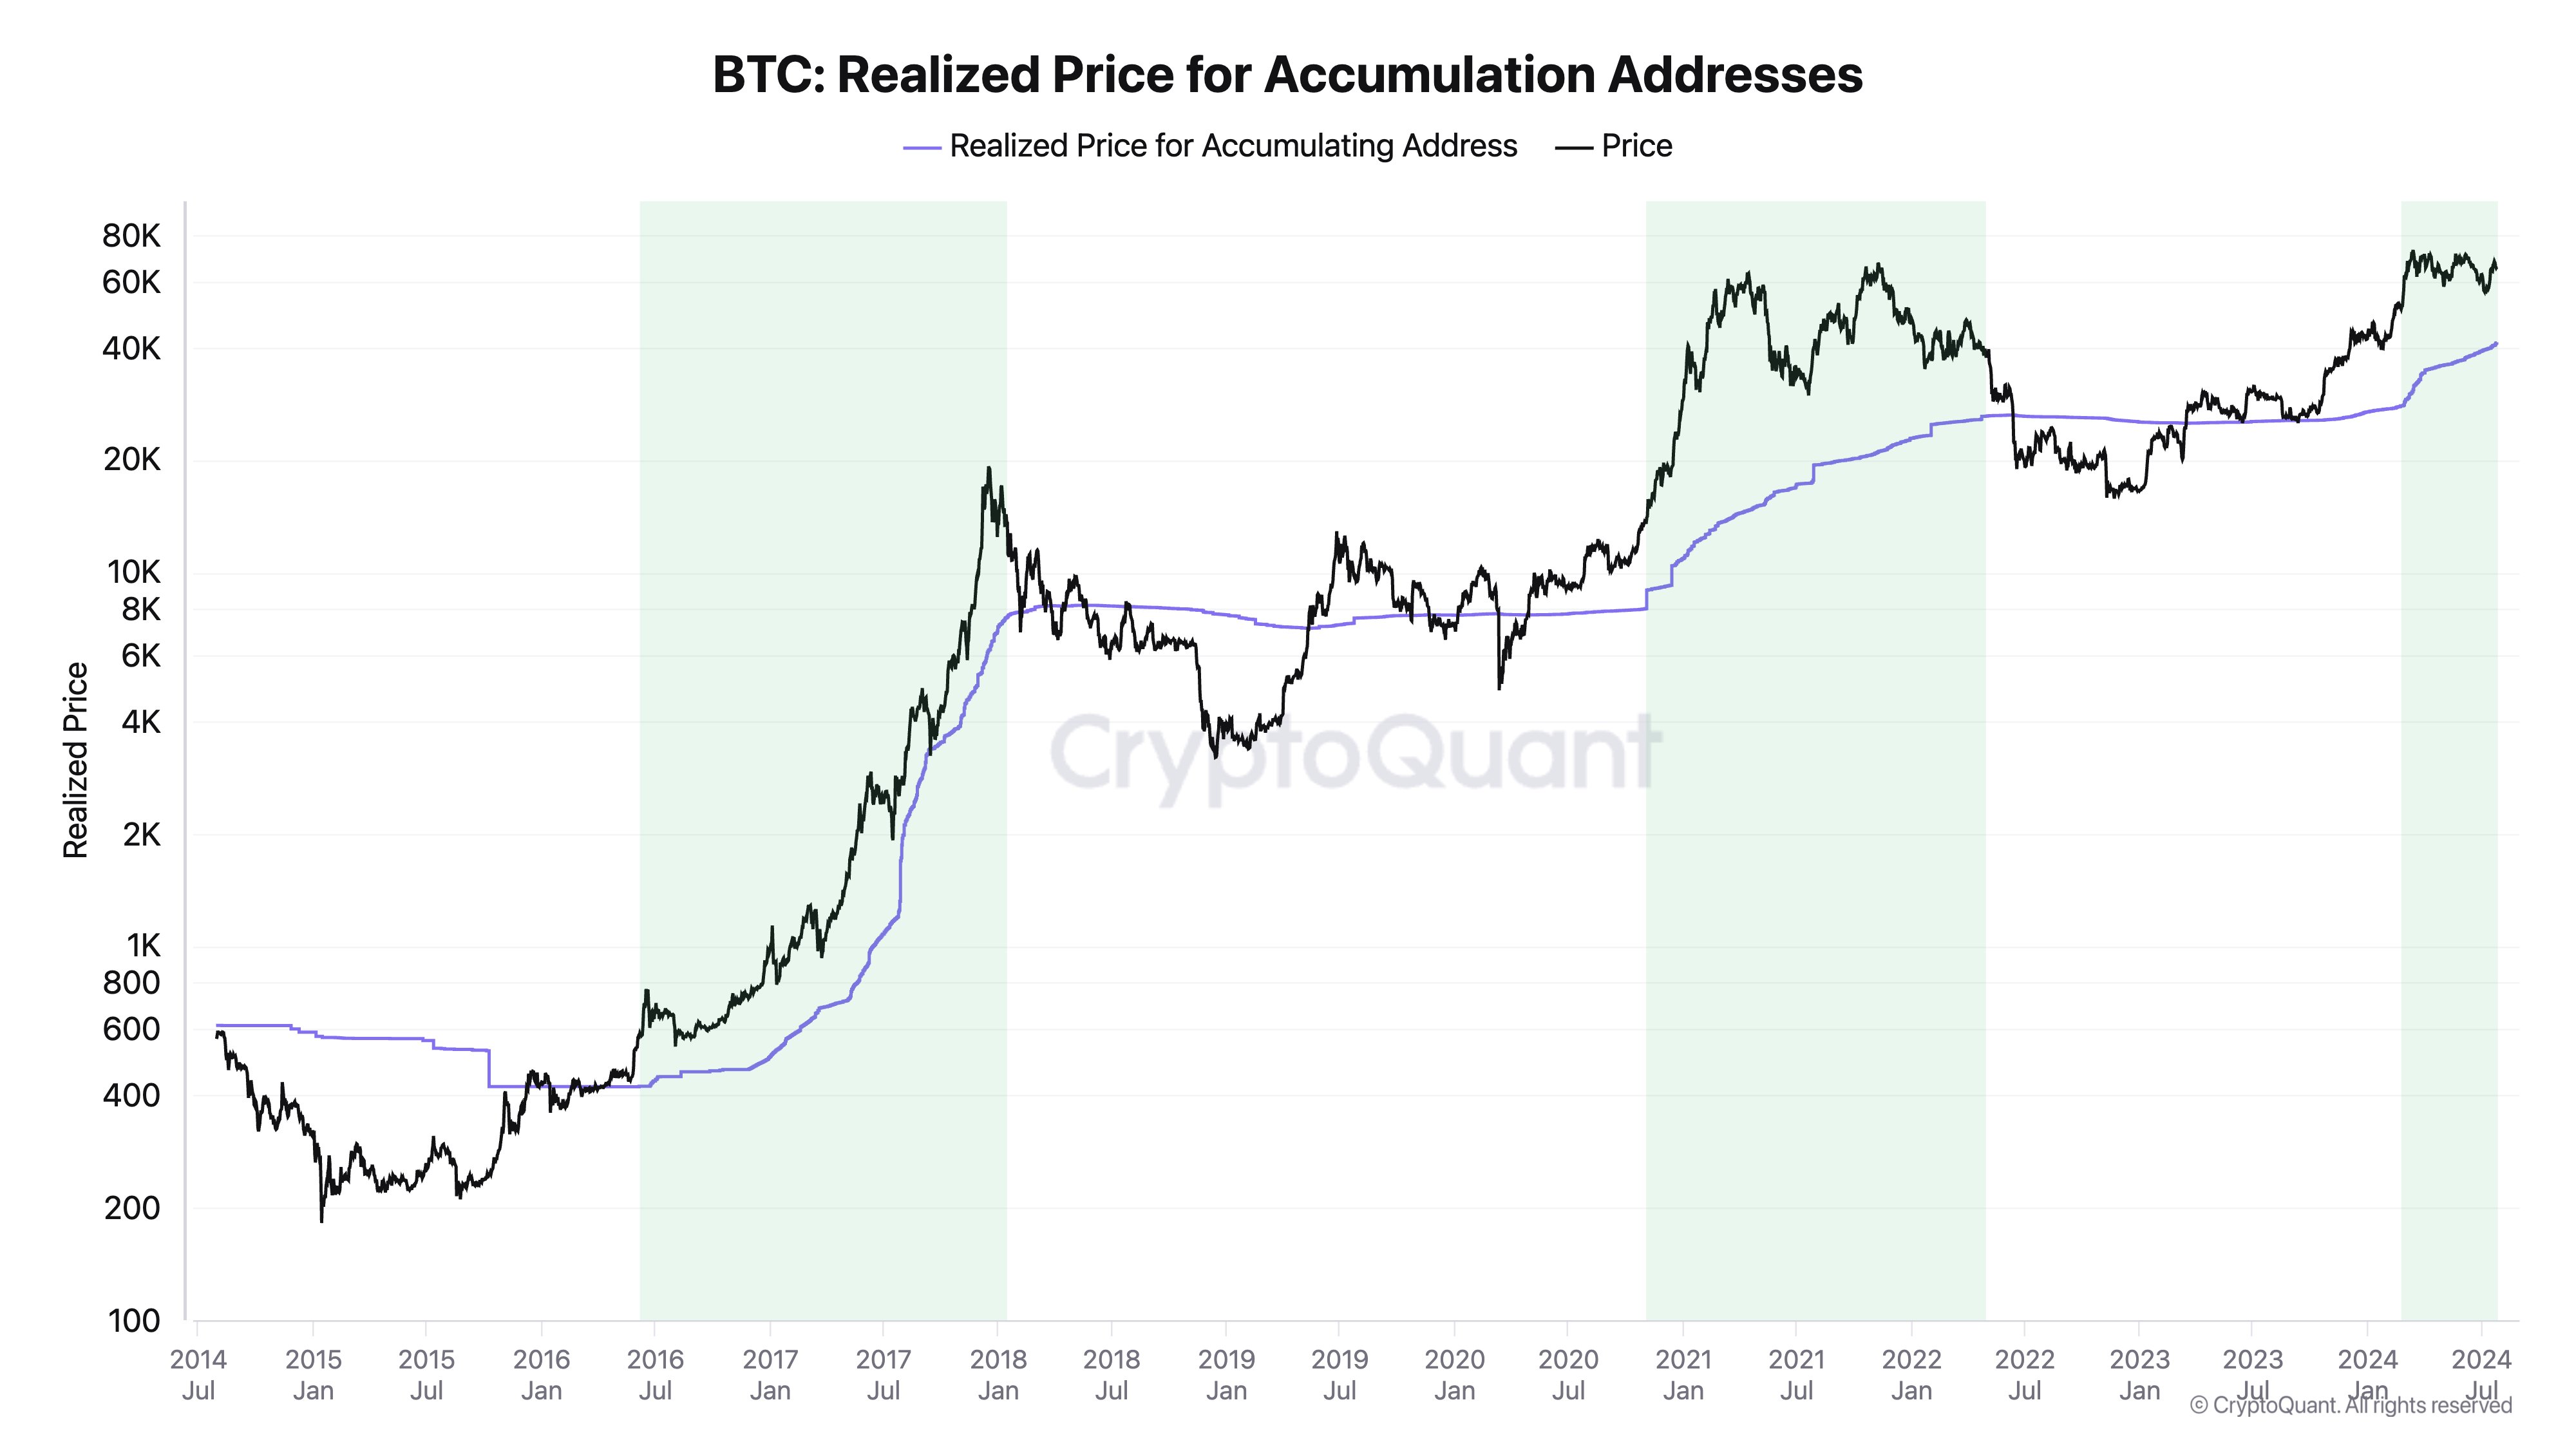 Bitcoin Accumulation Address Realized Price